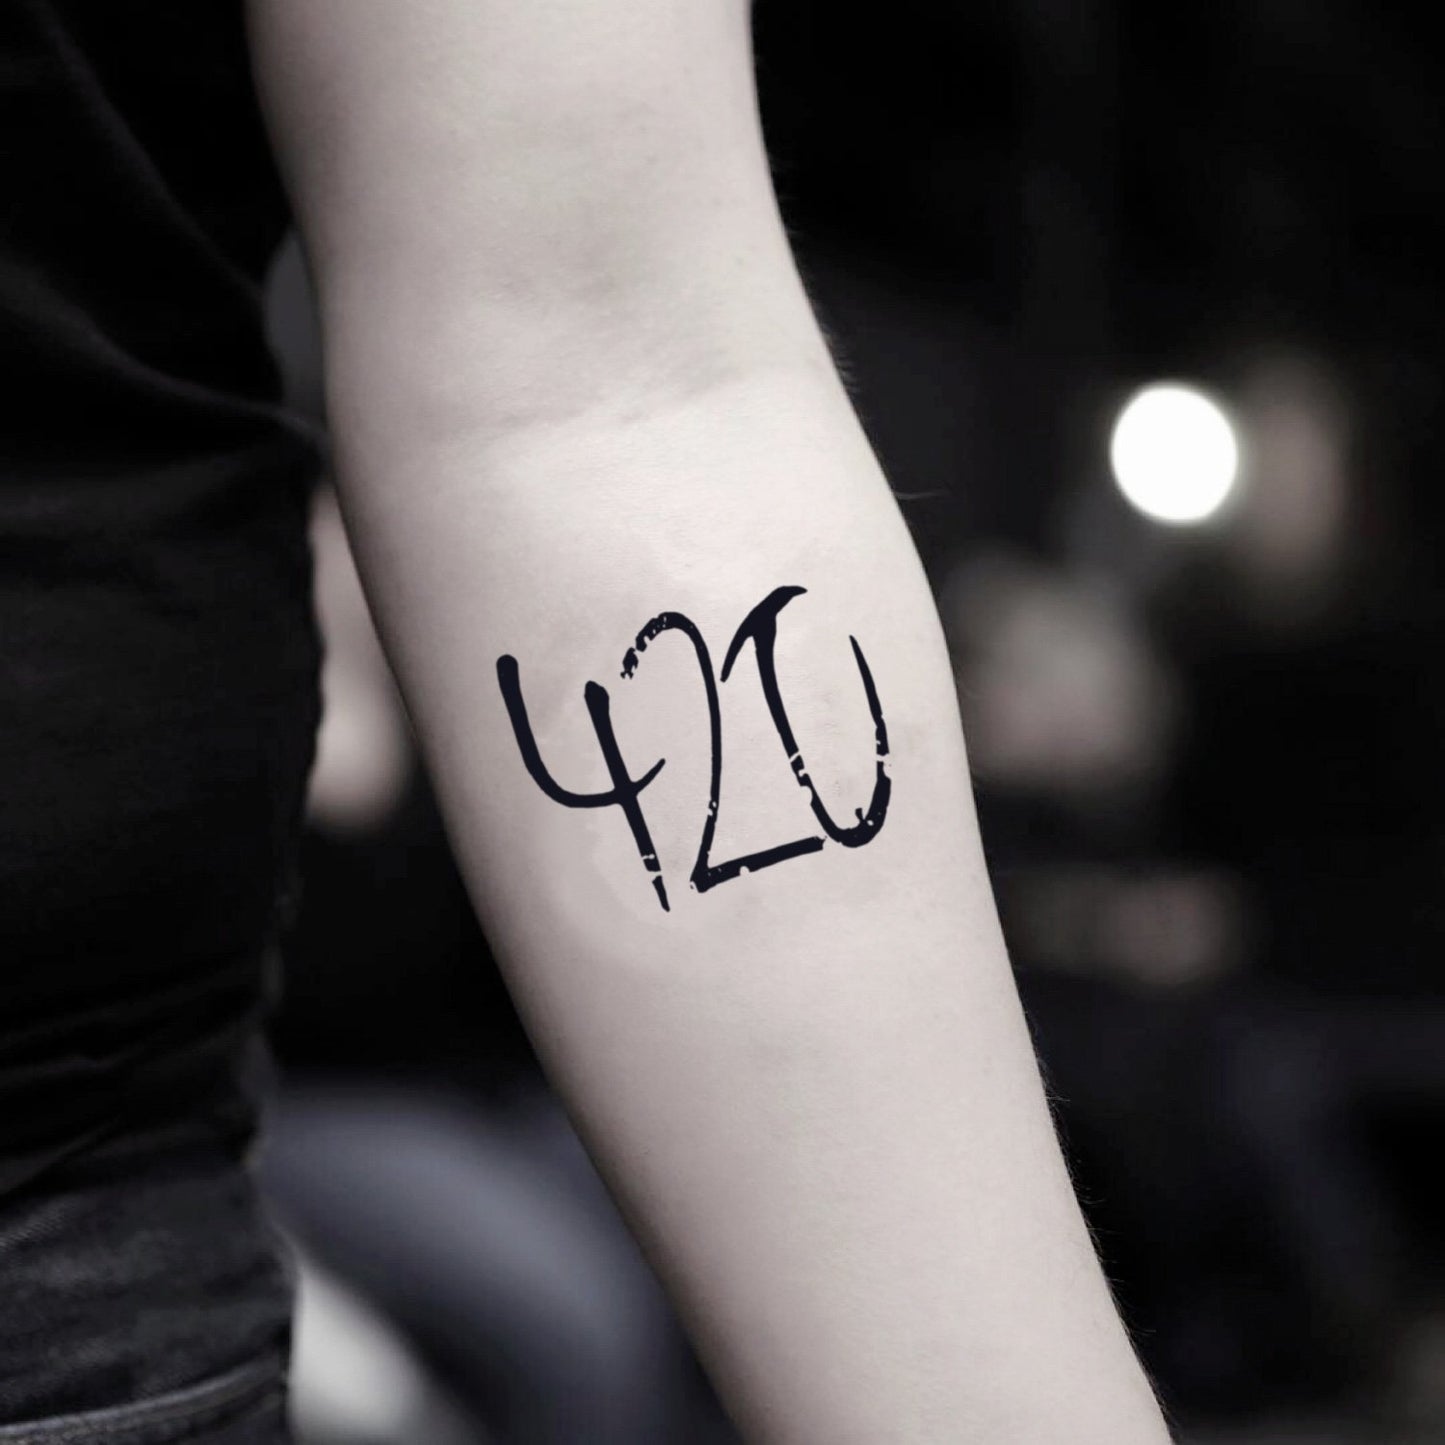 fake small 420 stoner lettering temporary tattoo sticker design idea on inner arm